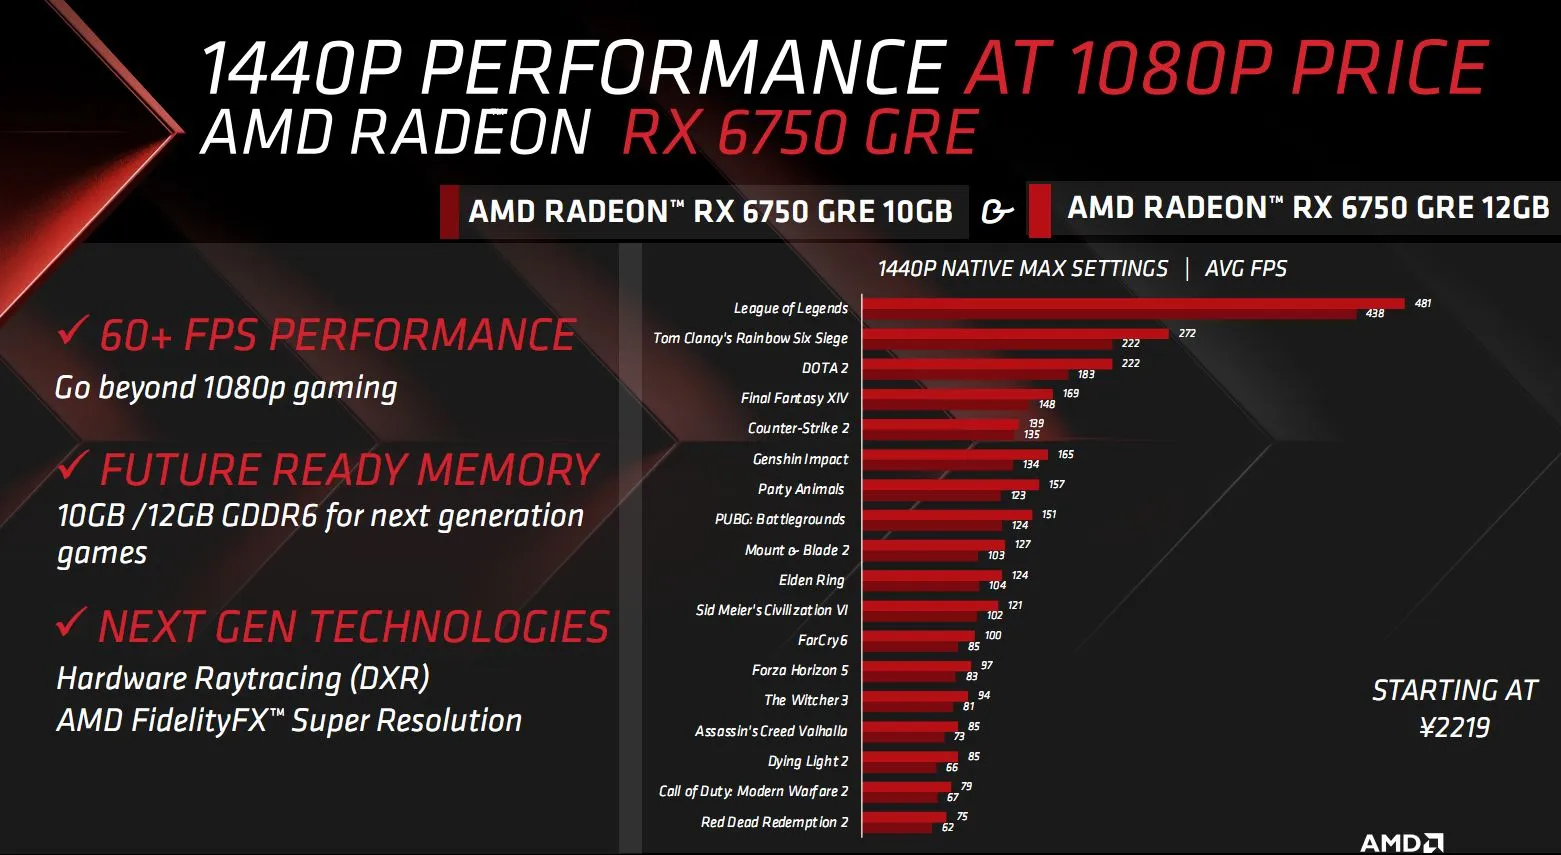 AMD RADEON RX 6750 GRE 3